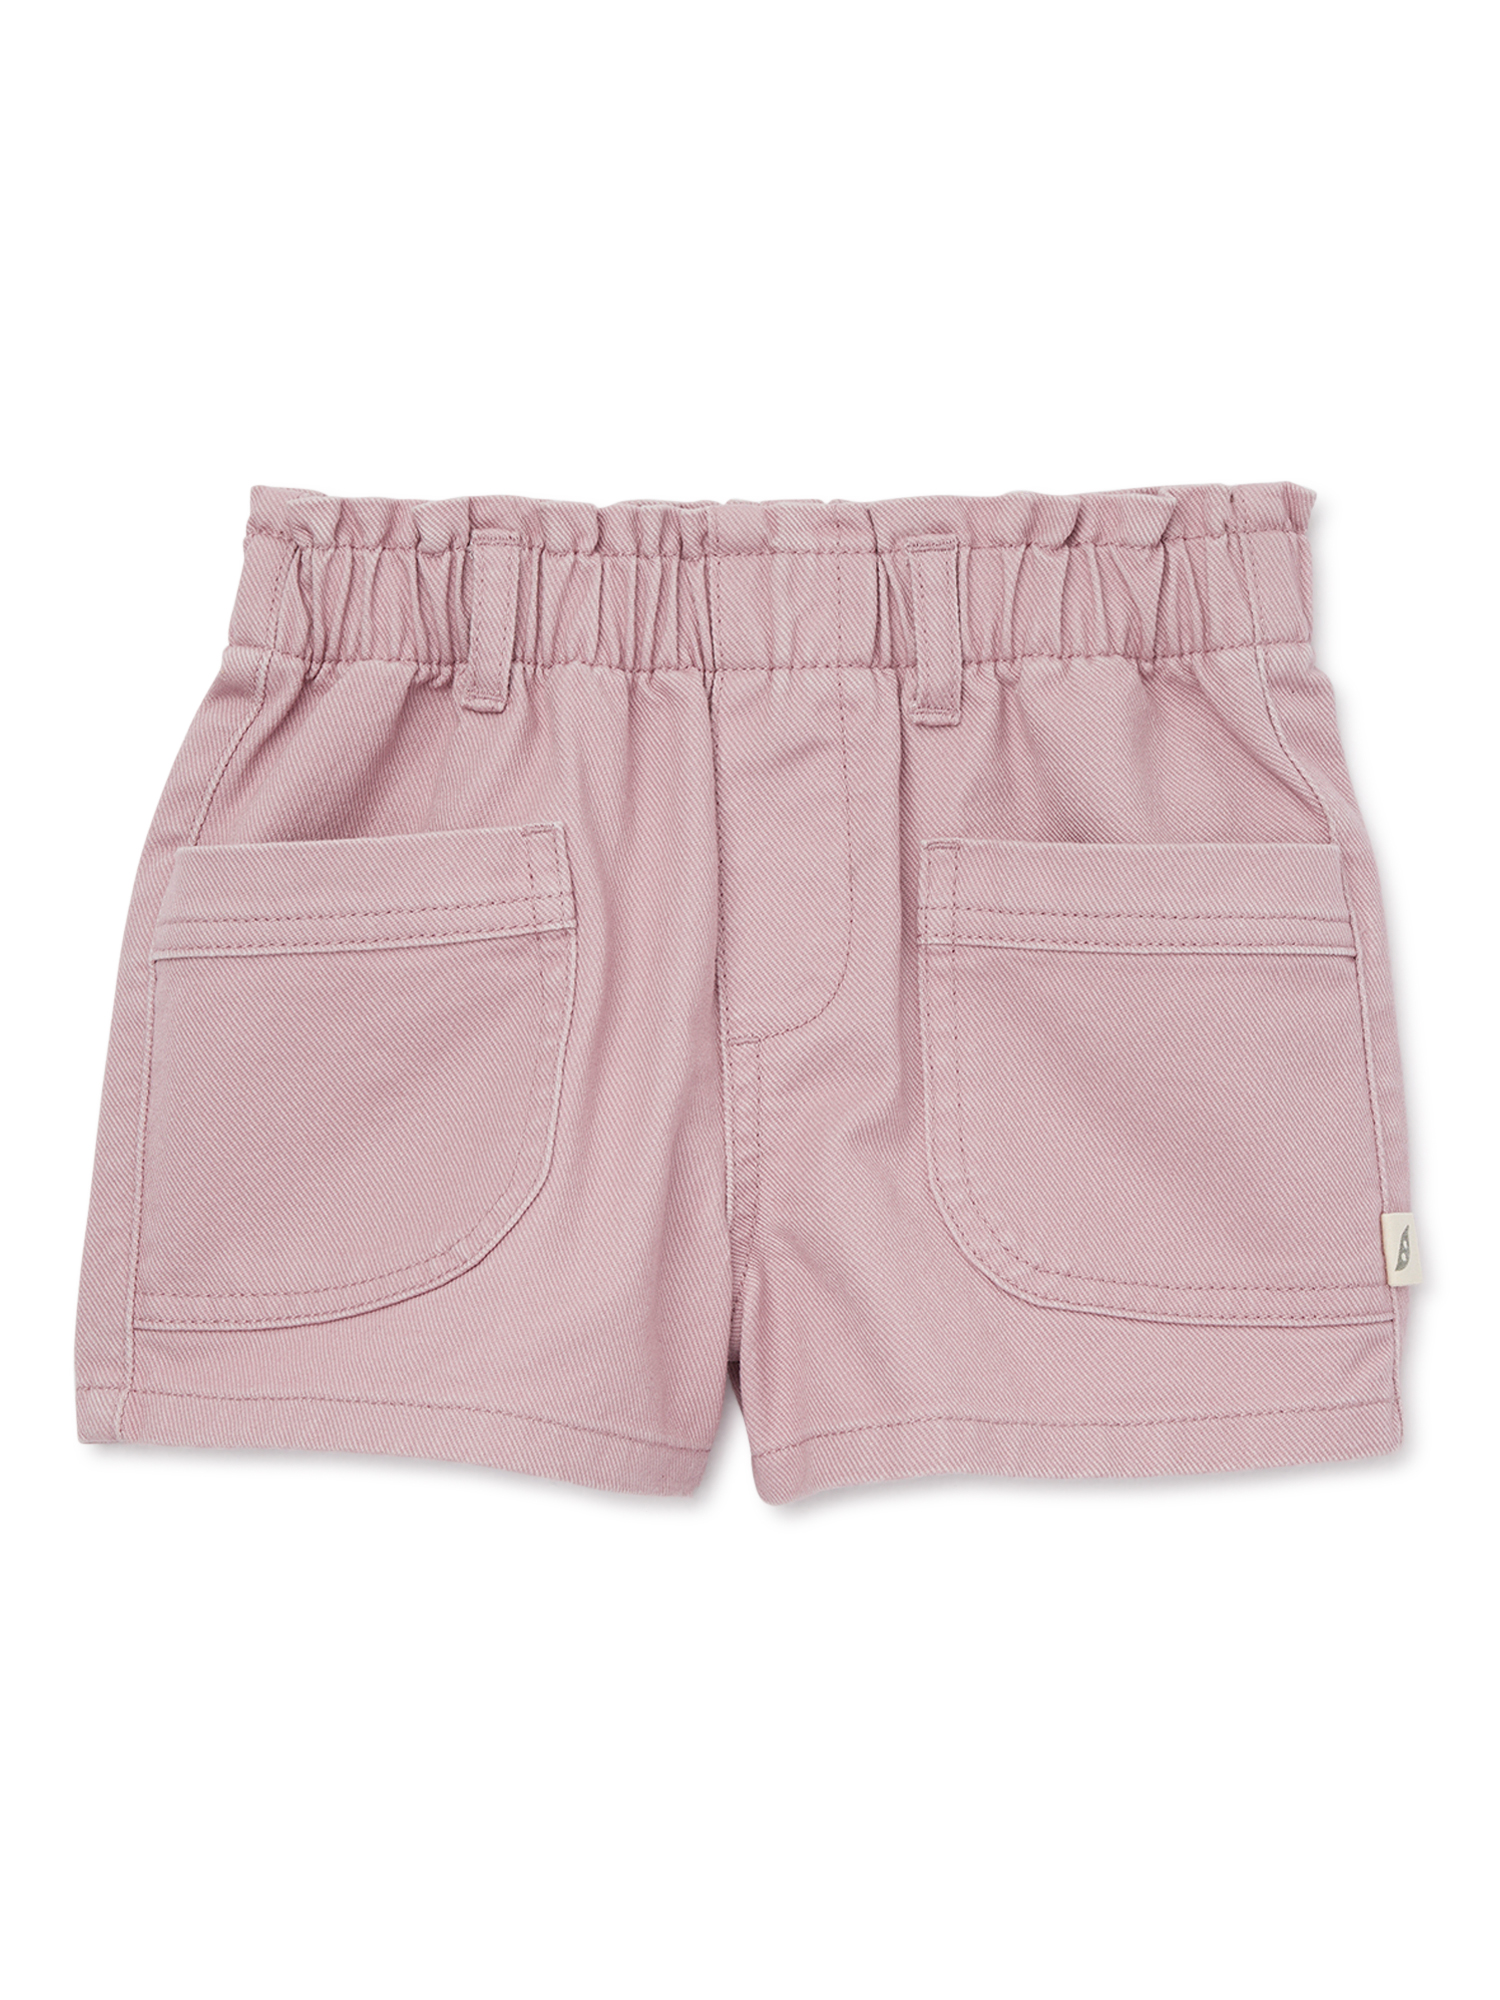 easy-peasy Toddler Girls Denim Shorts, Sizes 12M-5T - image 1 of 4